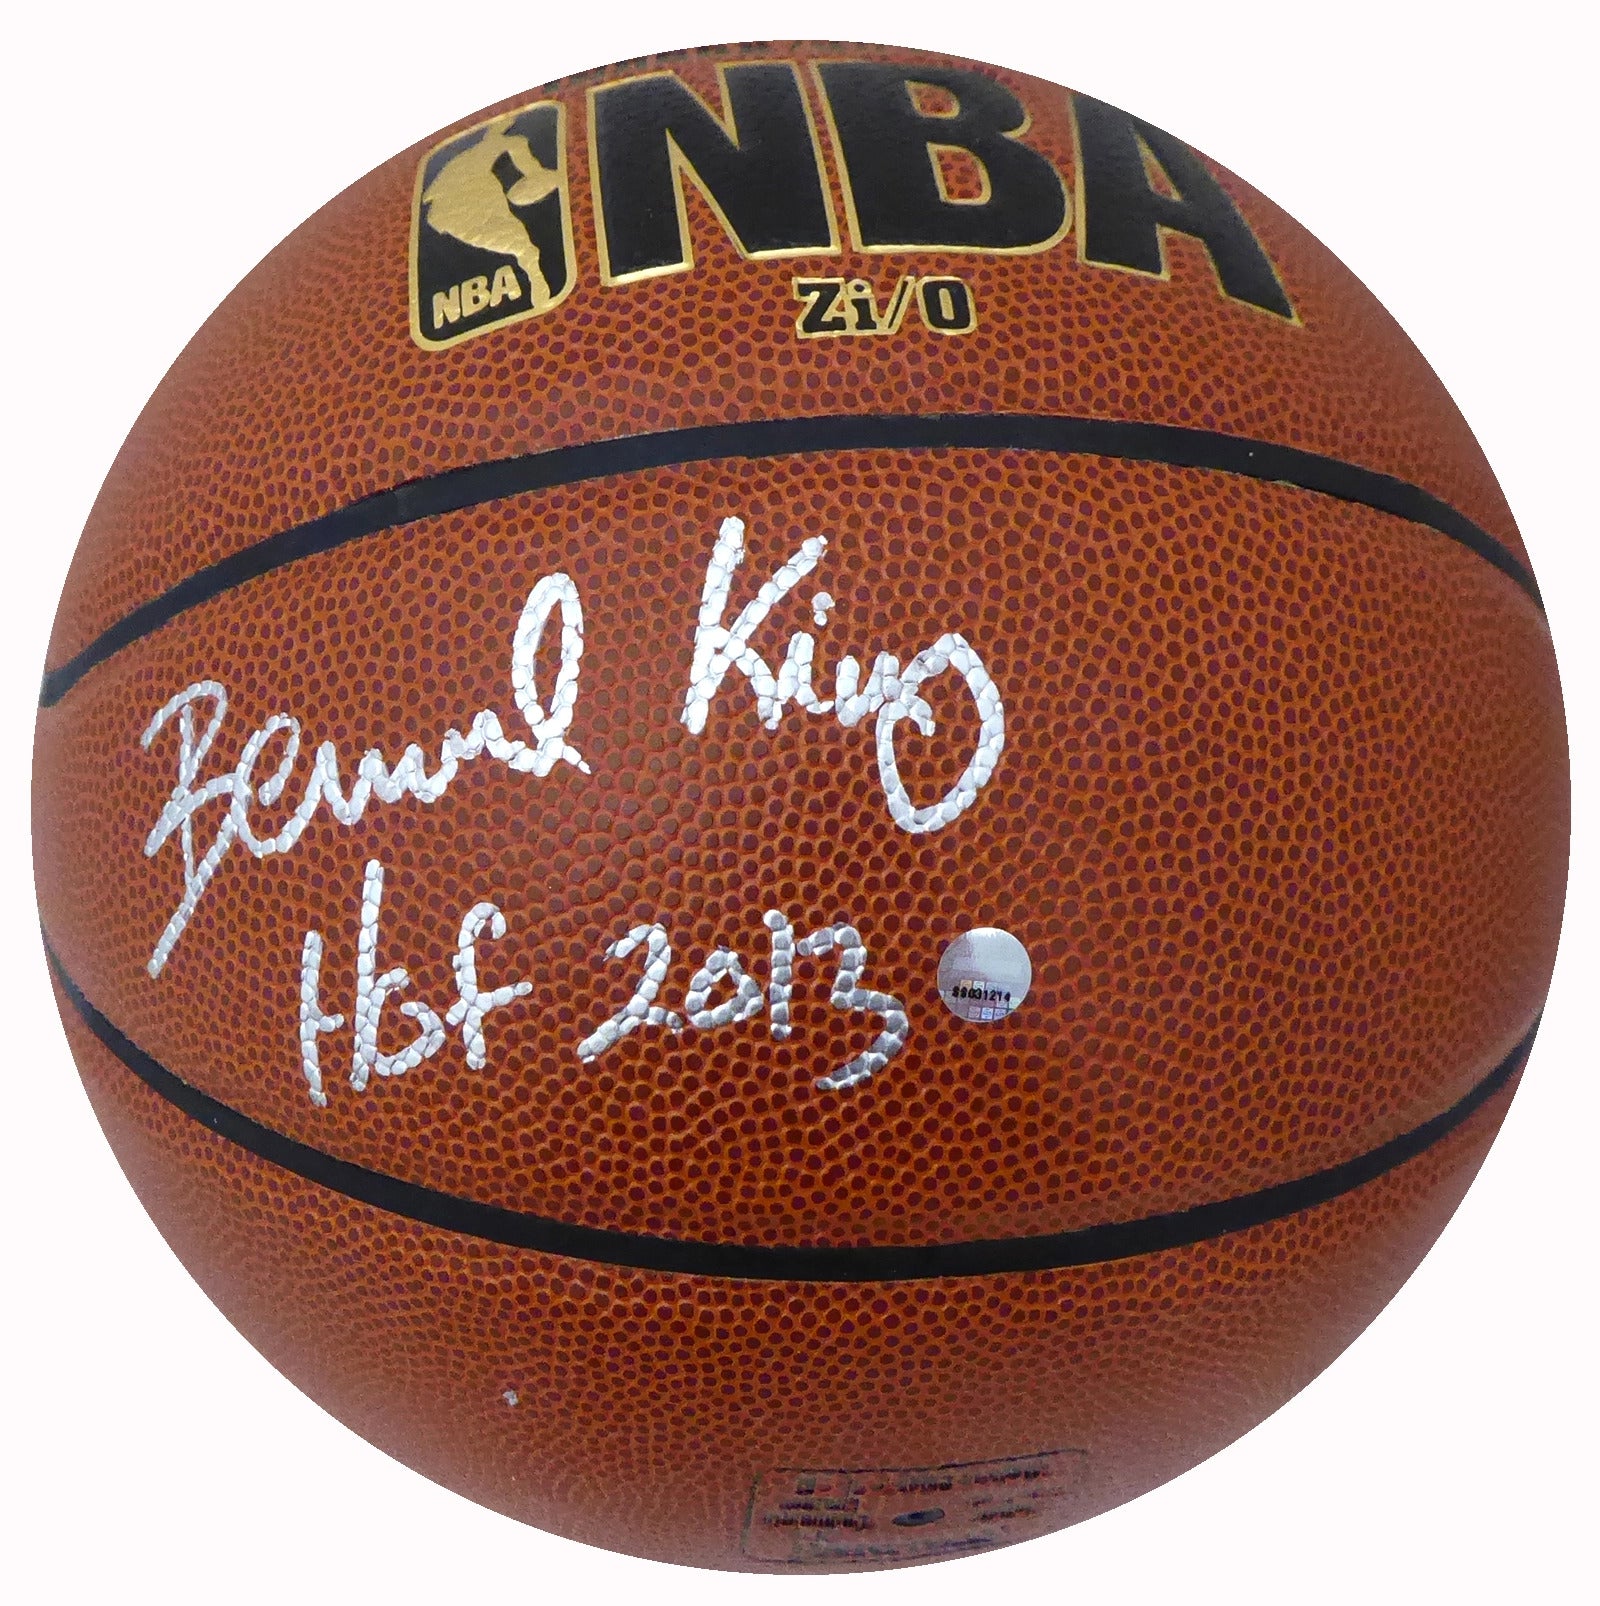 Bernard King Autographed NBA Basketball with HOF 2013